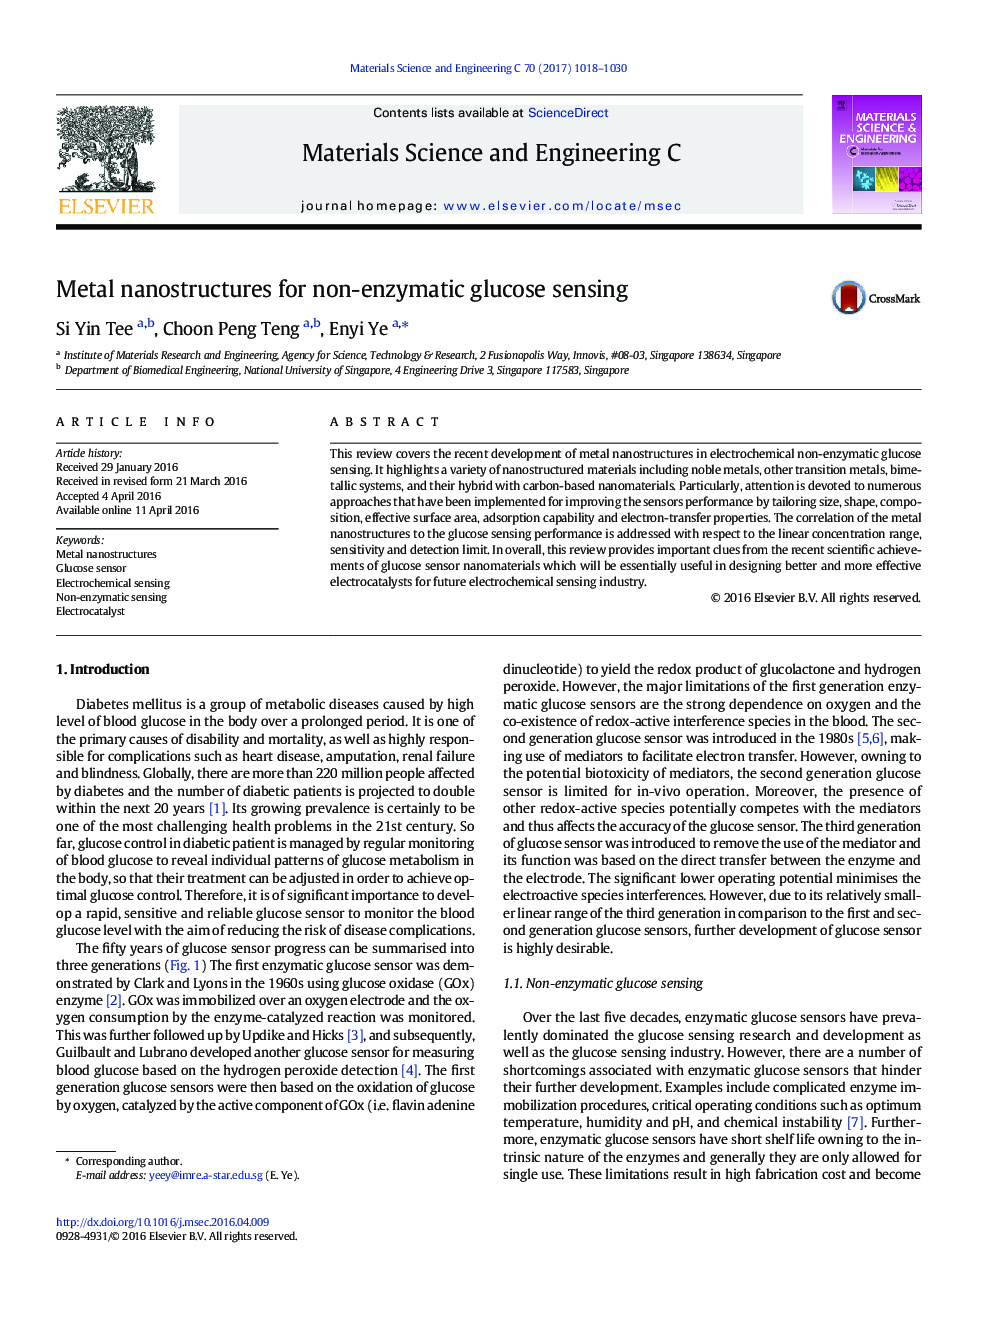 Metal nanostructures for non-enzymatic glucose sensing